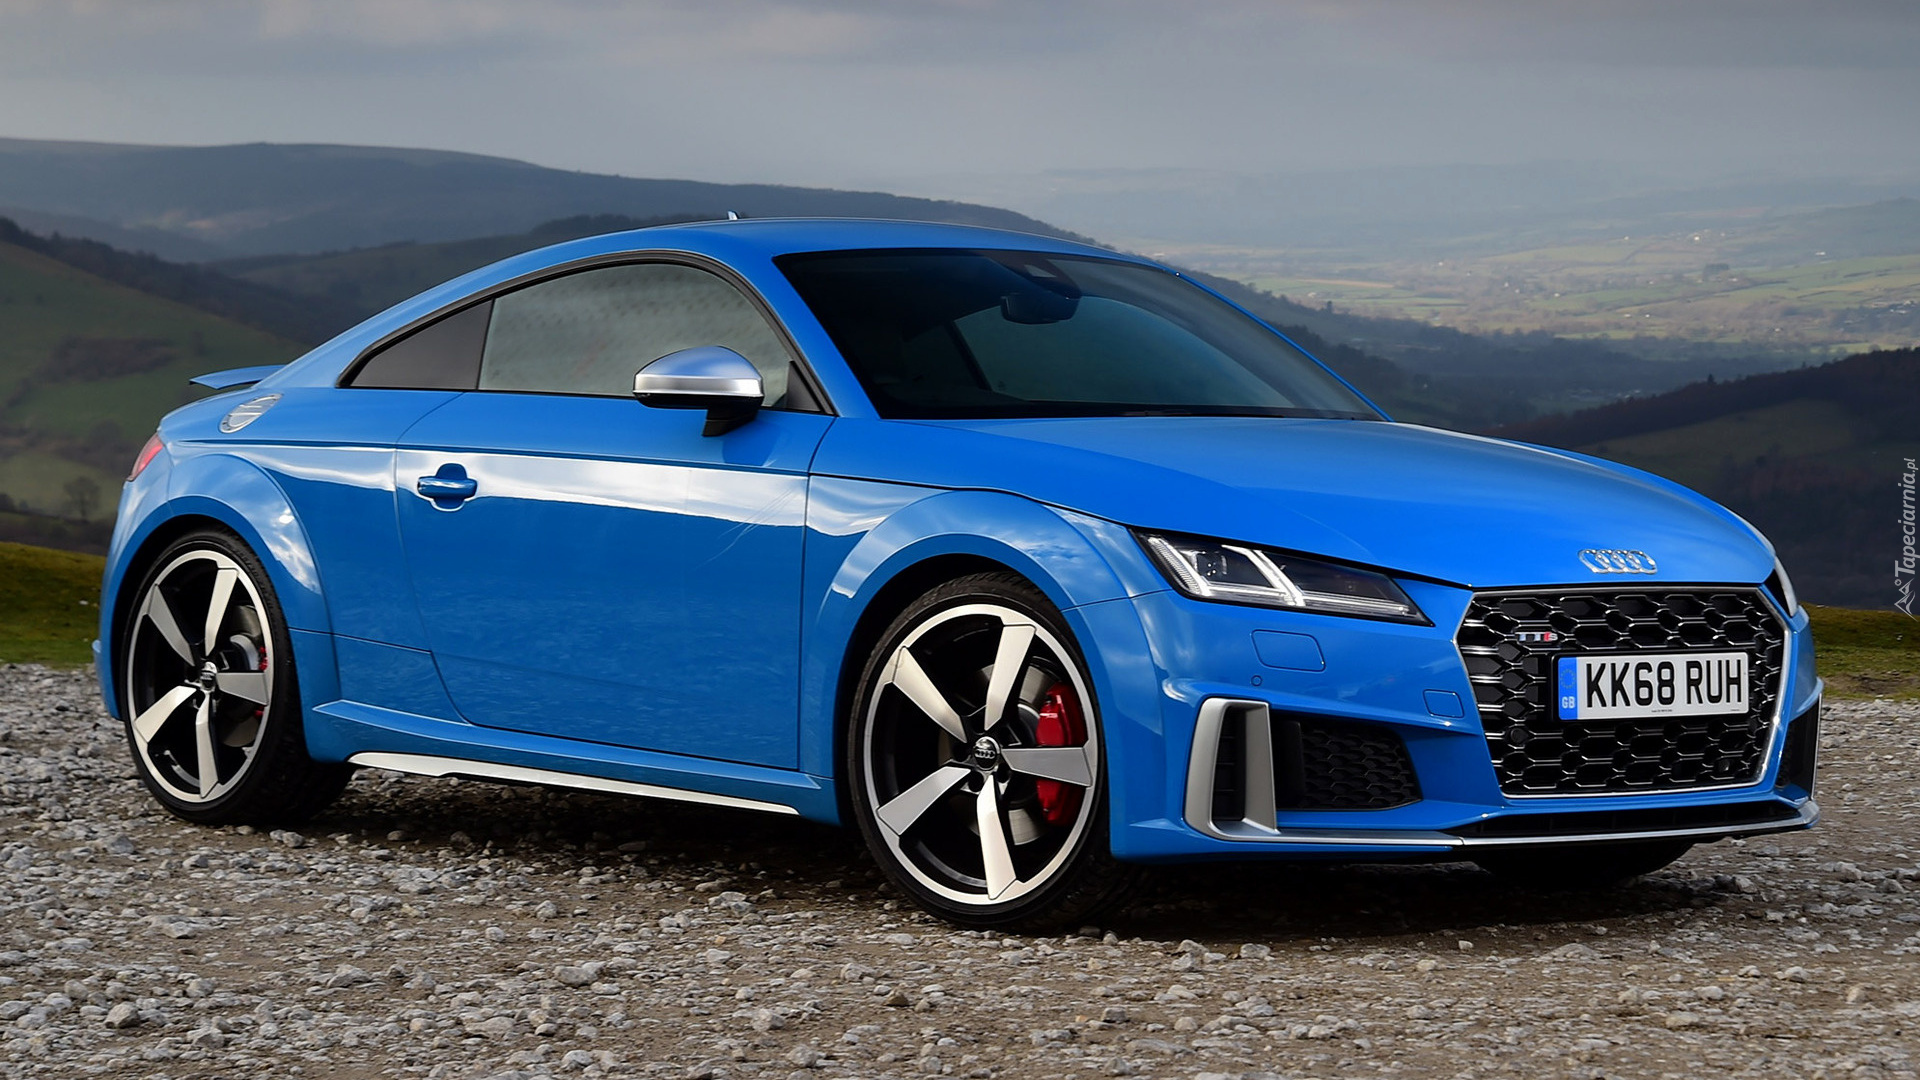 Niebieskie, Audi TTS Coupe